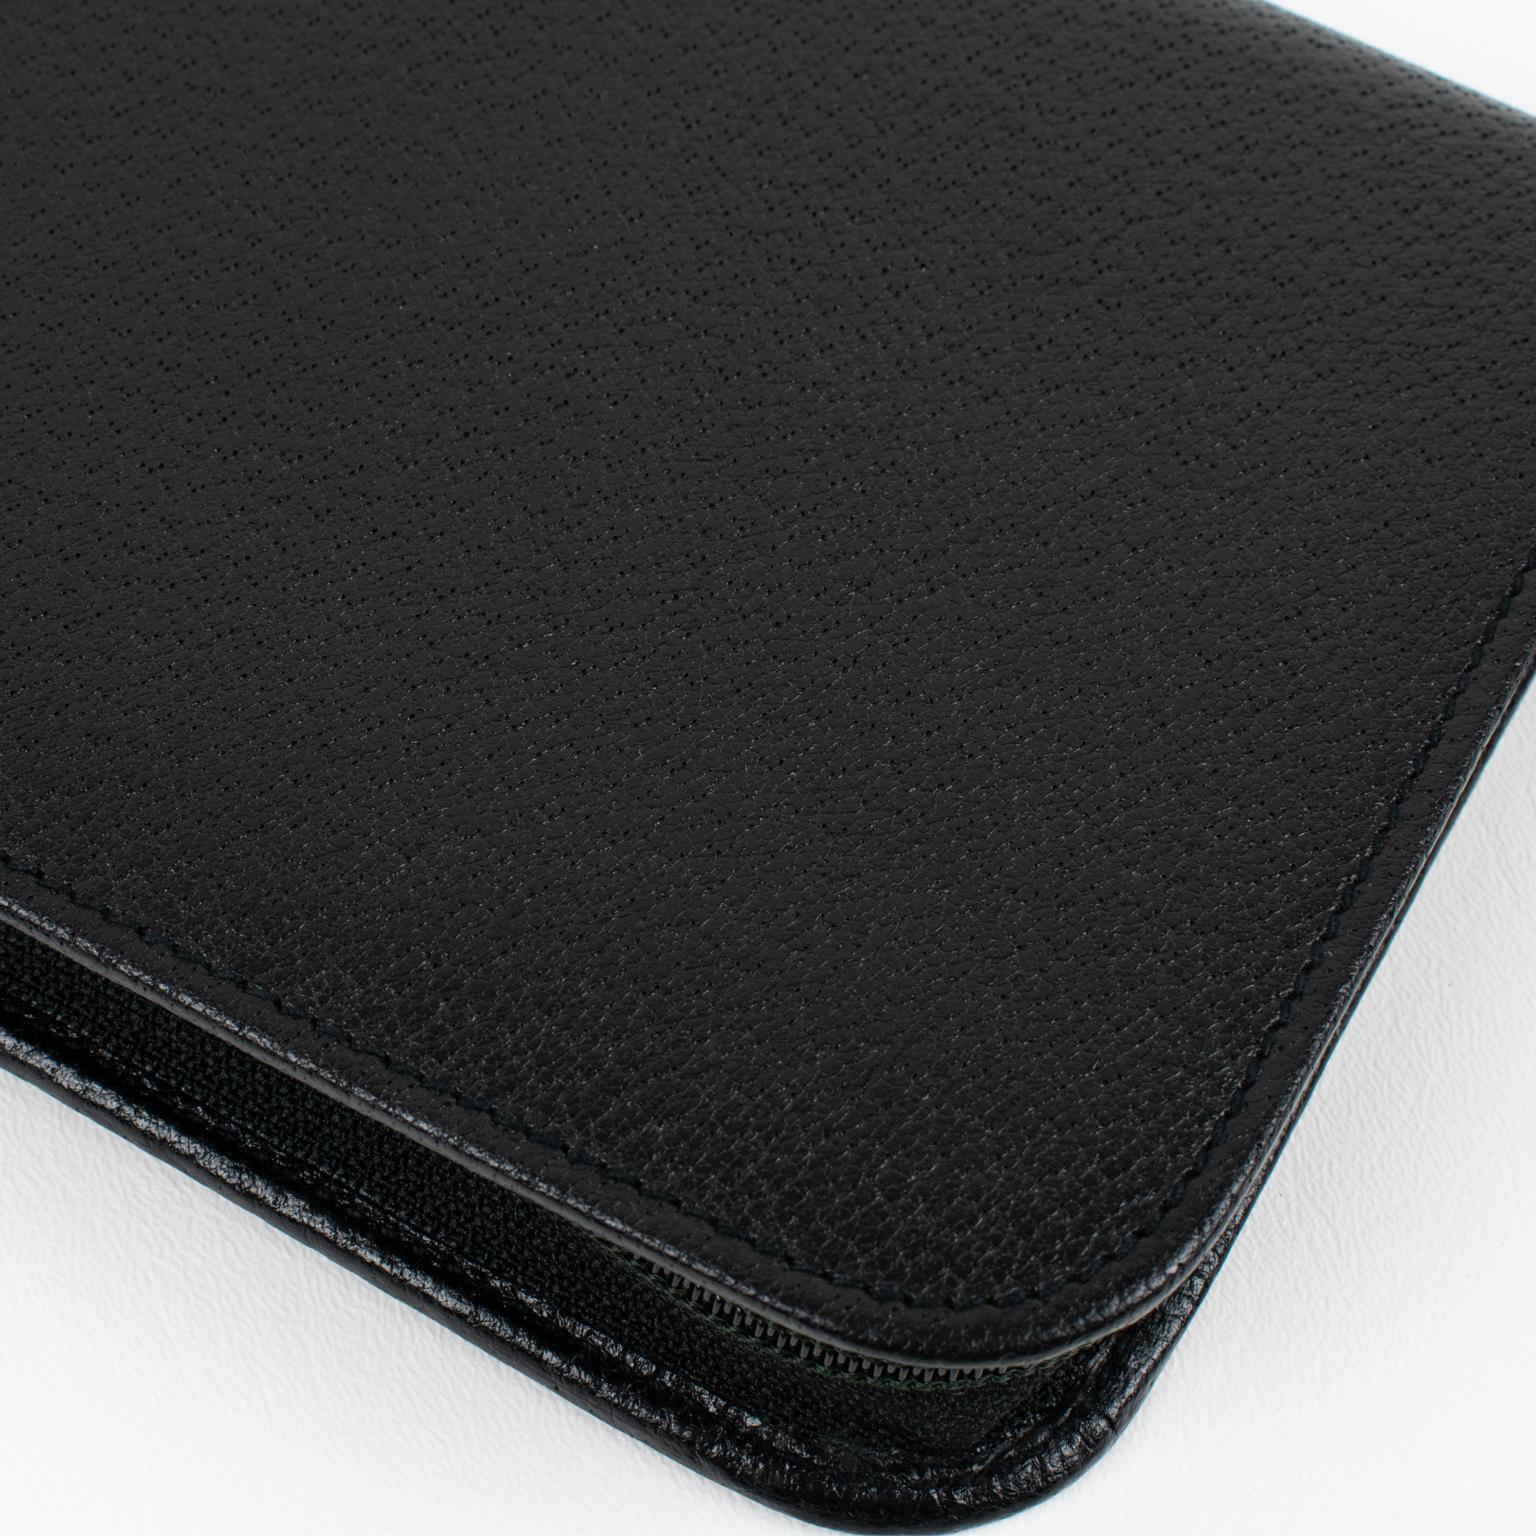 Gucci, Italy Hand-Stitched Black Leather Travel Tie Case Necktie Holder Rack 8